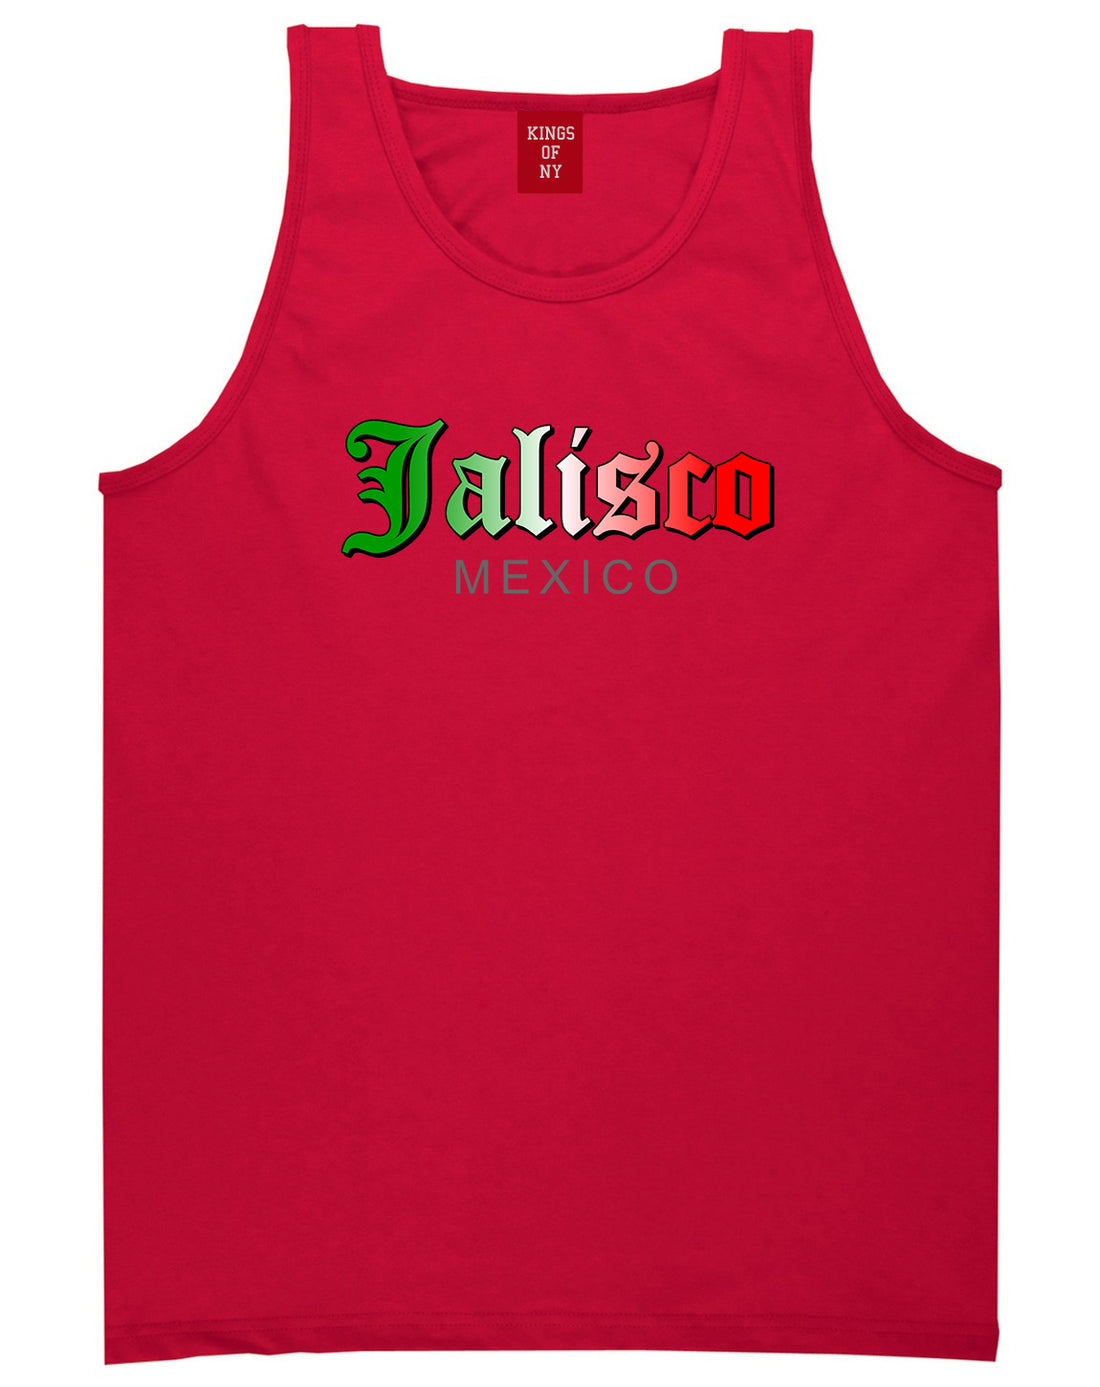 Jalisco Mexico Mens Tank Top Shirt Red